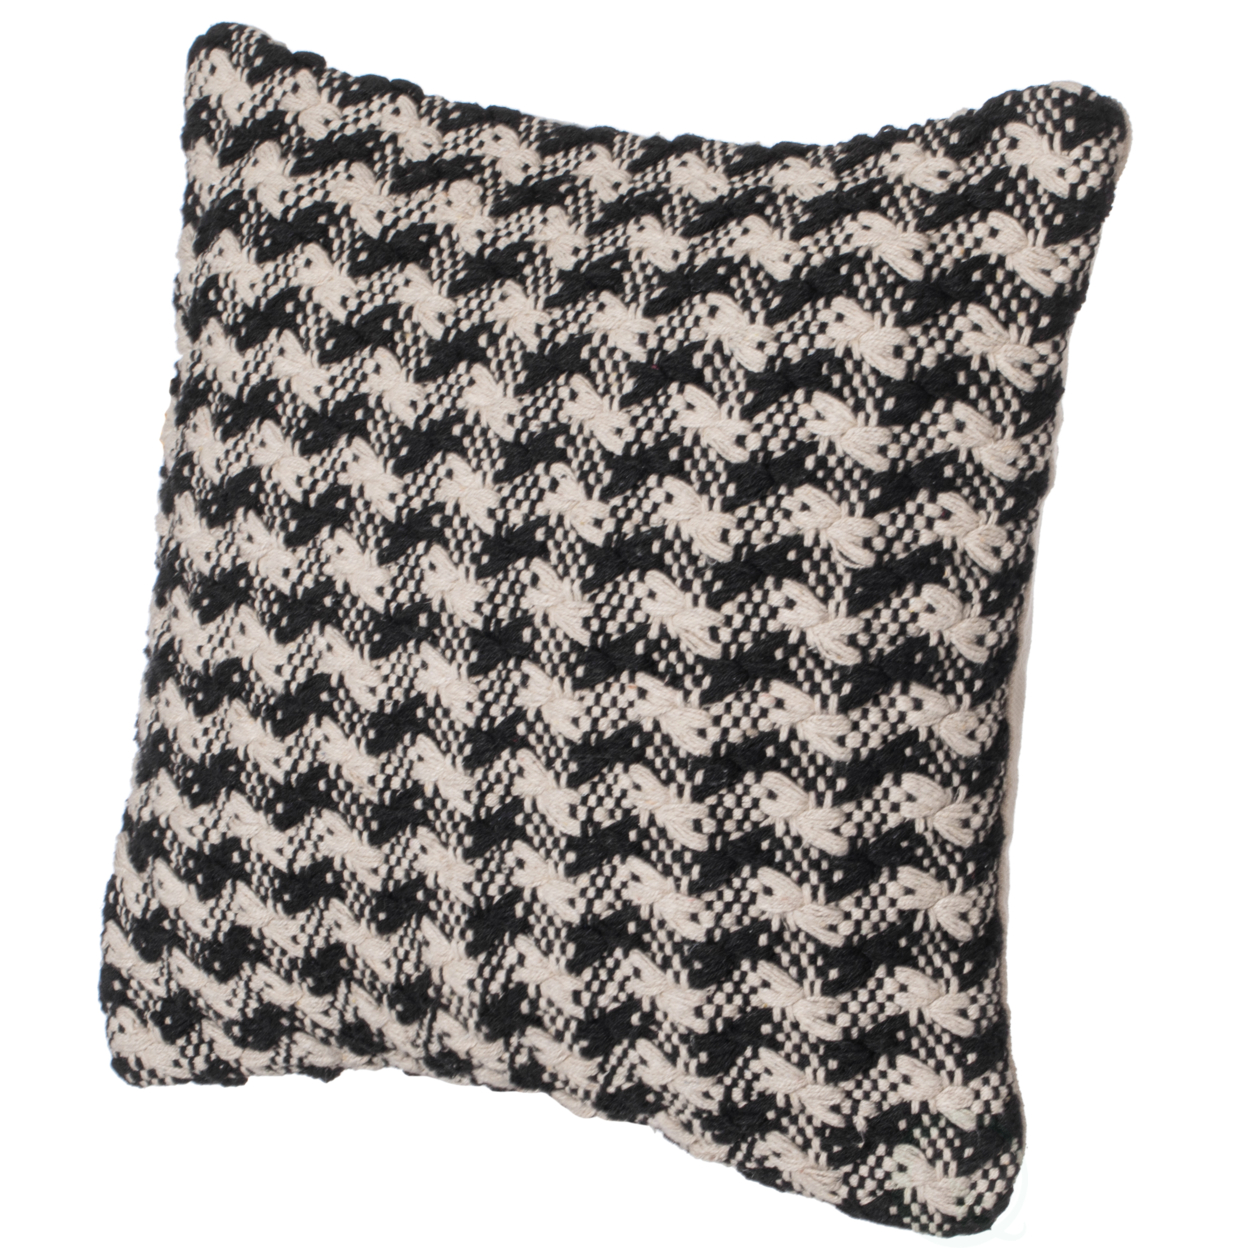 16 Handwoven Cotton Throw Pillow Cover Chevron & Gingham Design Black & White - Chevron With Cushion